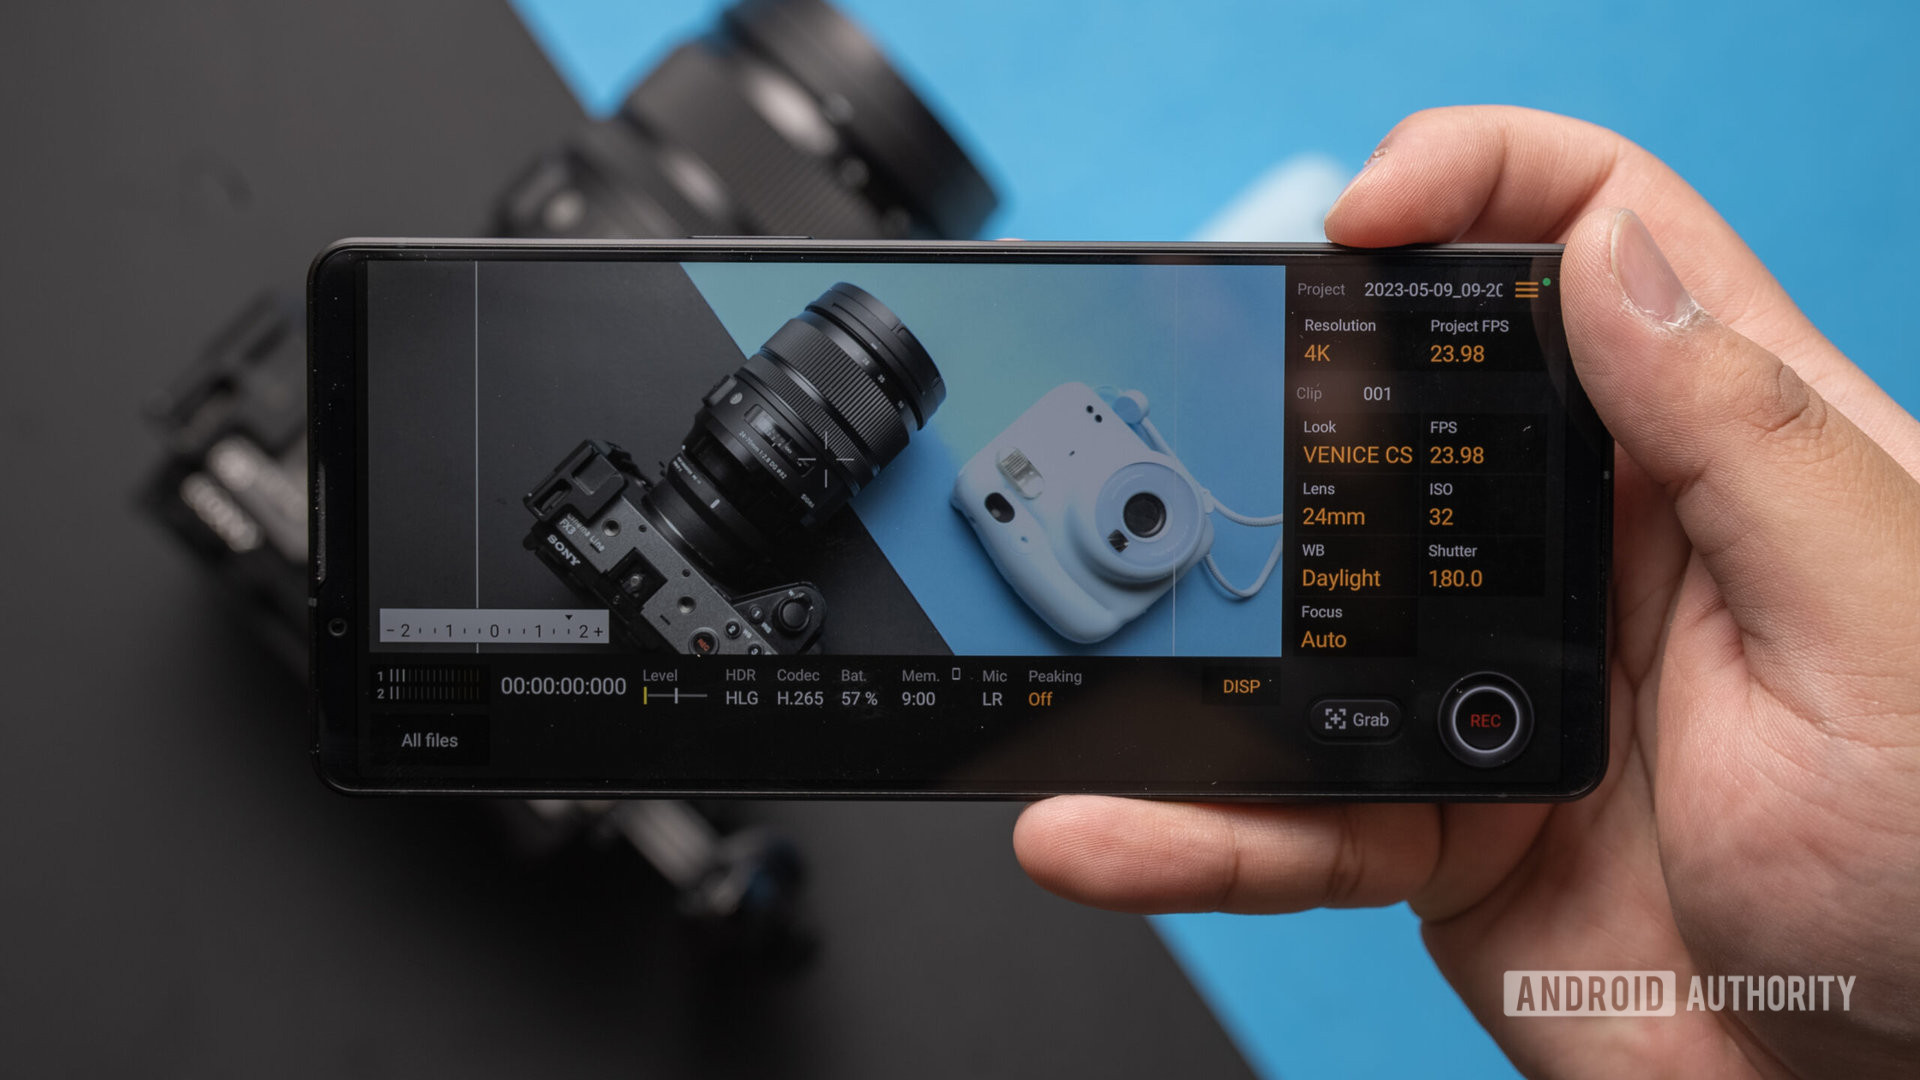 Sony Xperia 1 V cineamtograph pro app